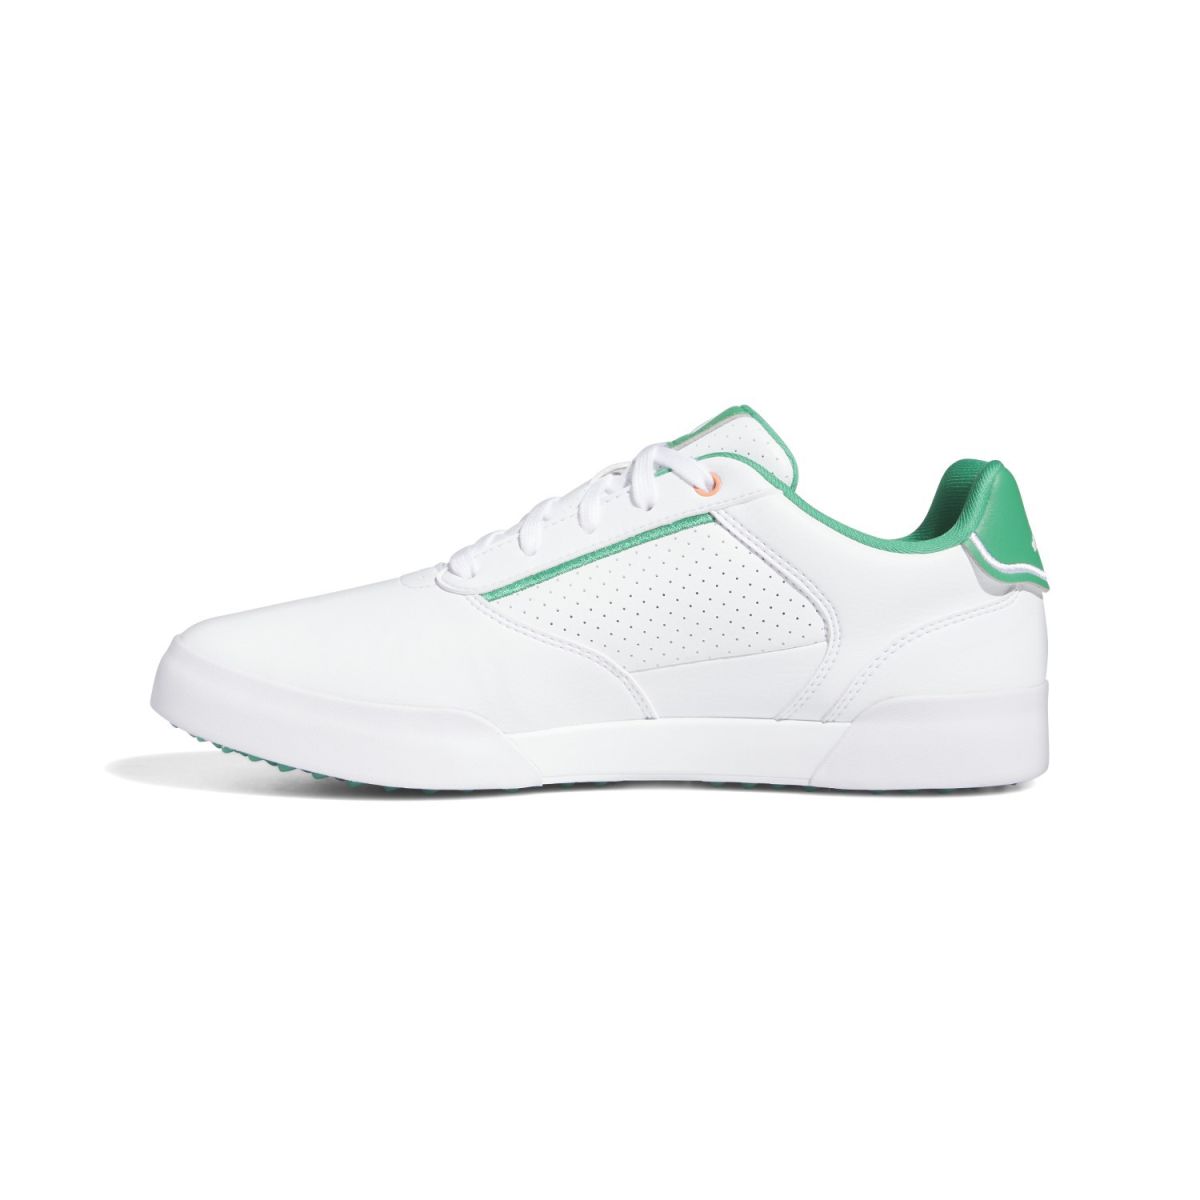 adidas retrocross white green 41 13